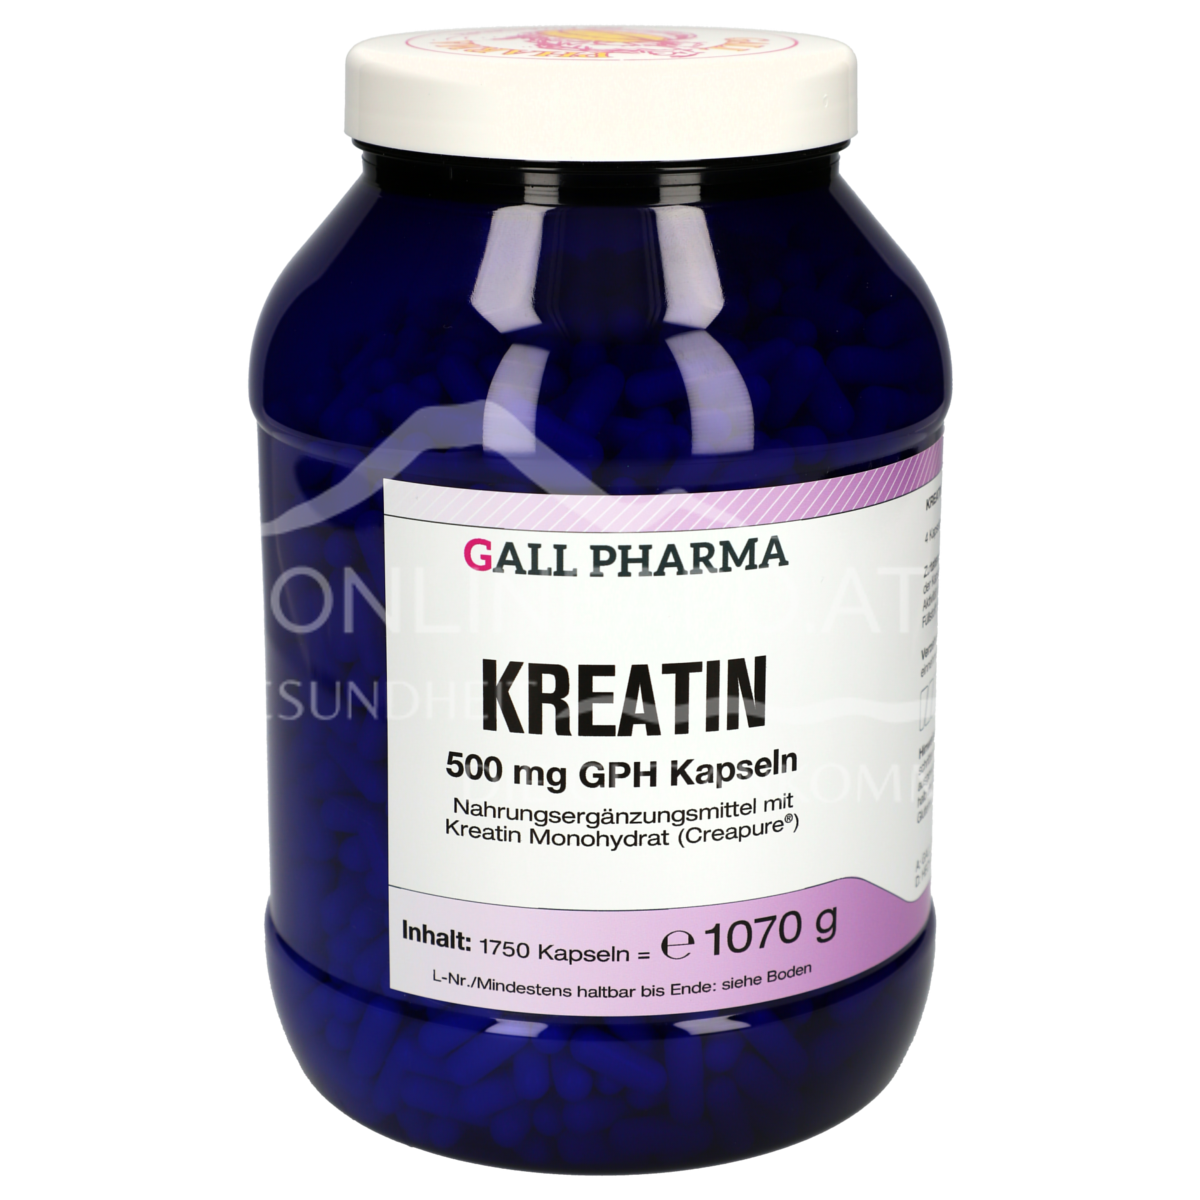 Gall Pharma Kreatin 500 mg Kapseln